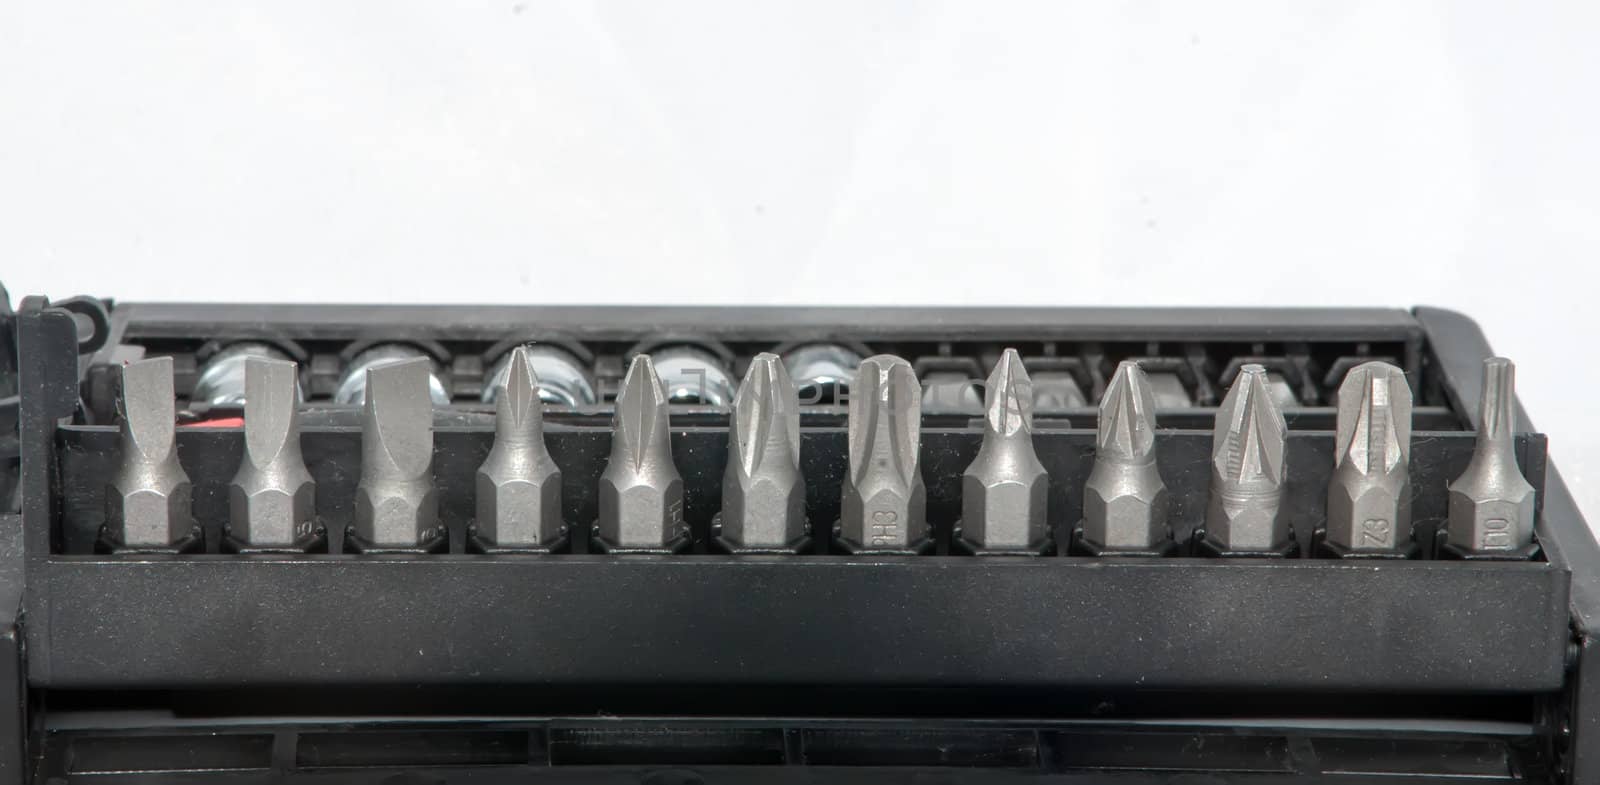 various size screwdriver pieces